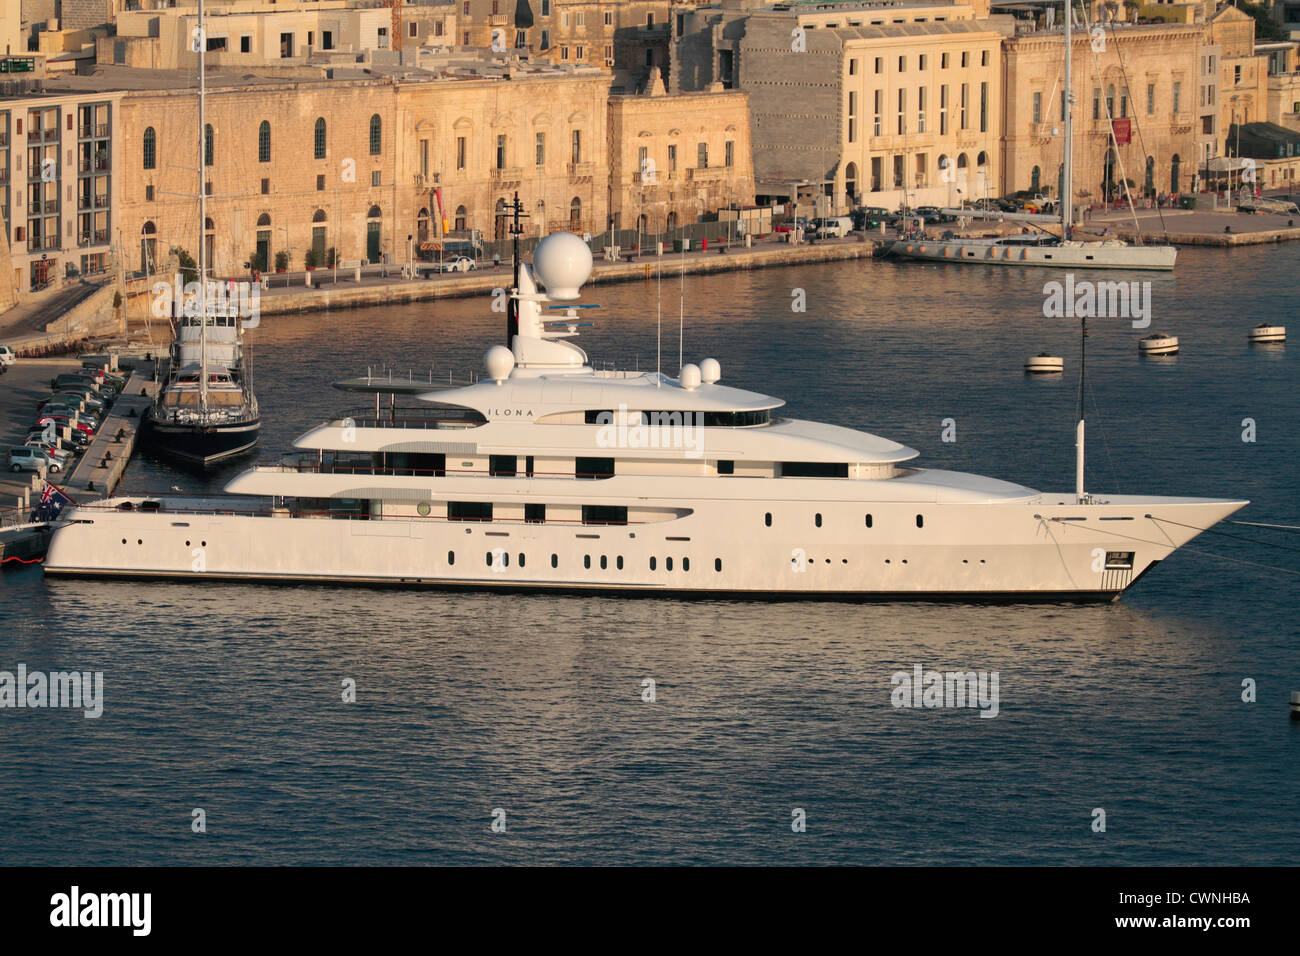 The superyacht Ilona in Malta's Grand Harbour Stock Photo